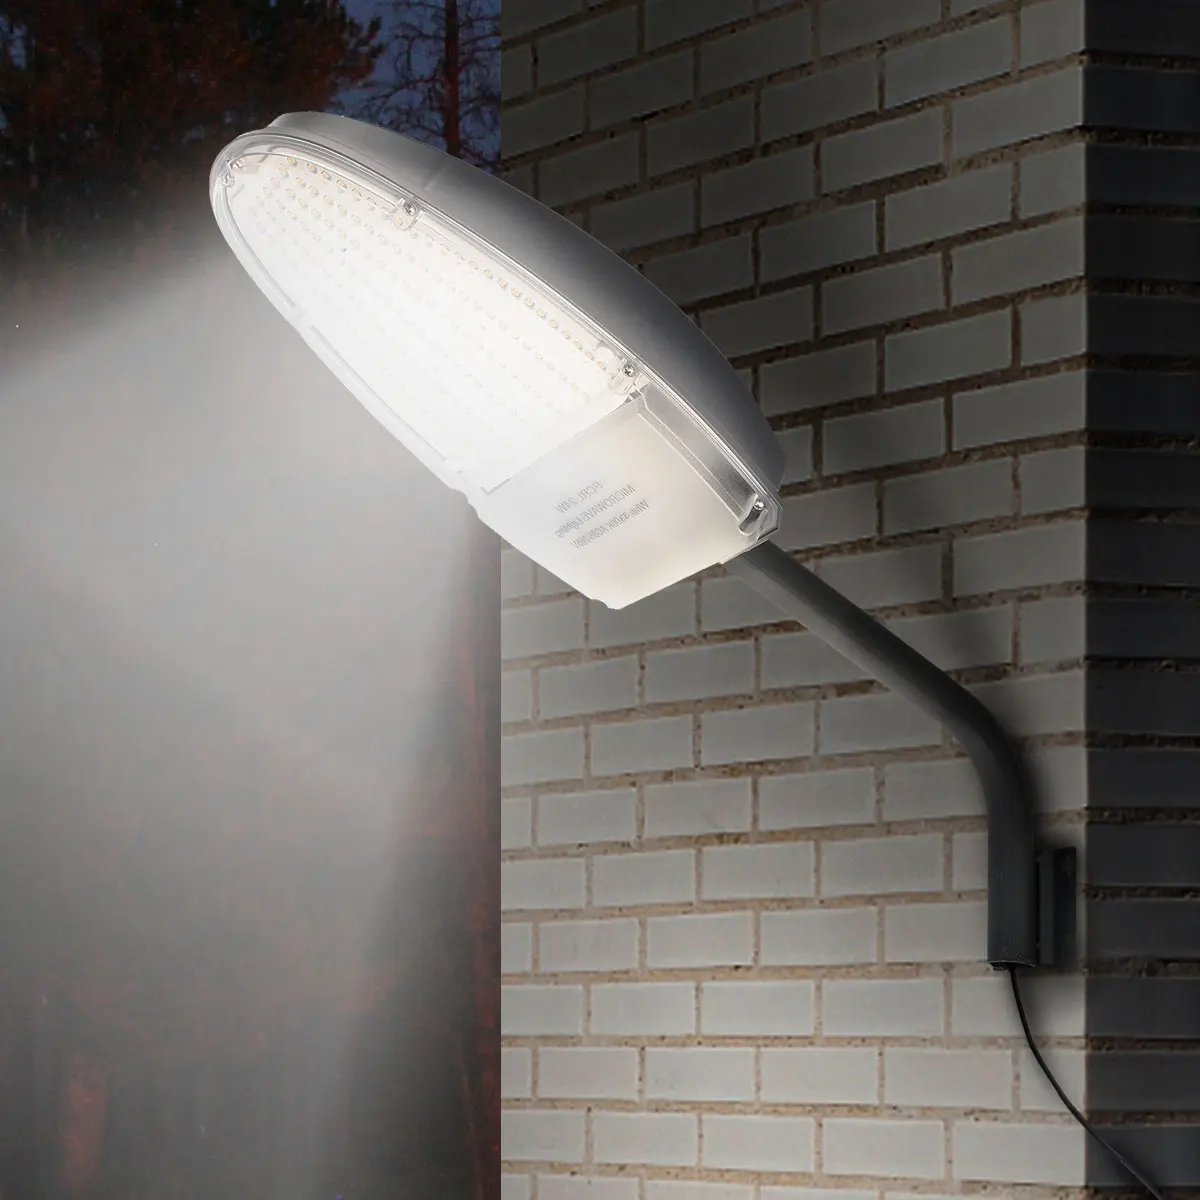 

LED Lamp 24W Road Street Flood Light White/Warm 85-265V 2400 Garden Light Sensor Control Durable Energy Conservation Waterproof